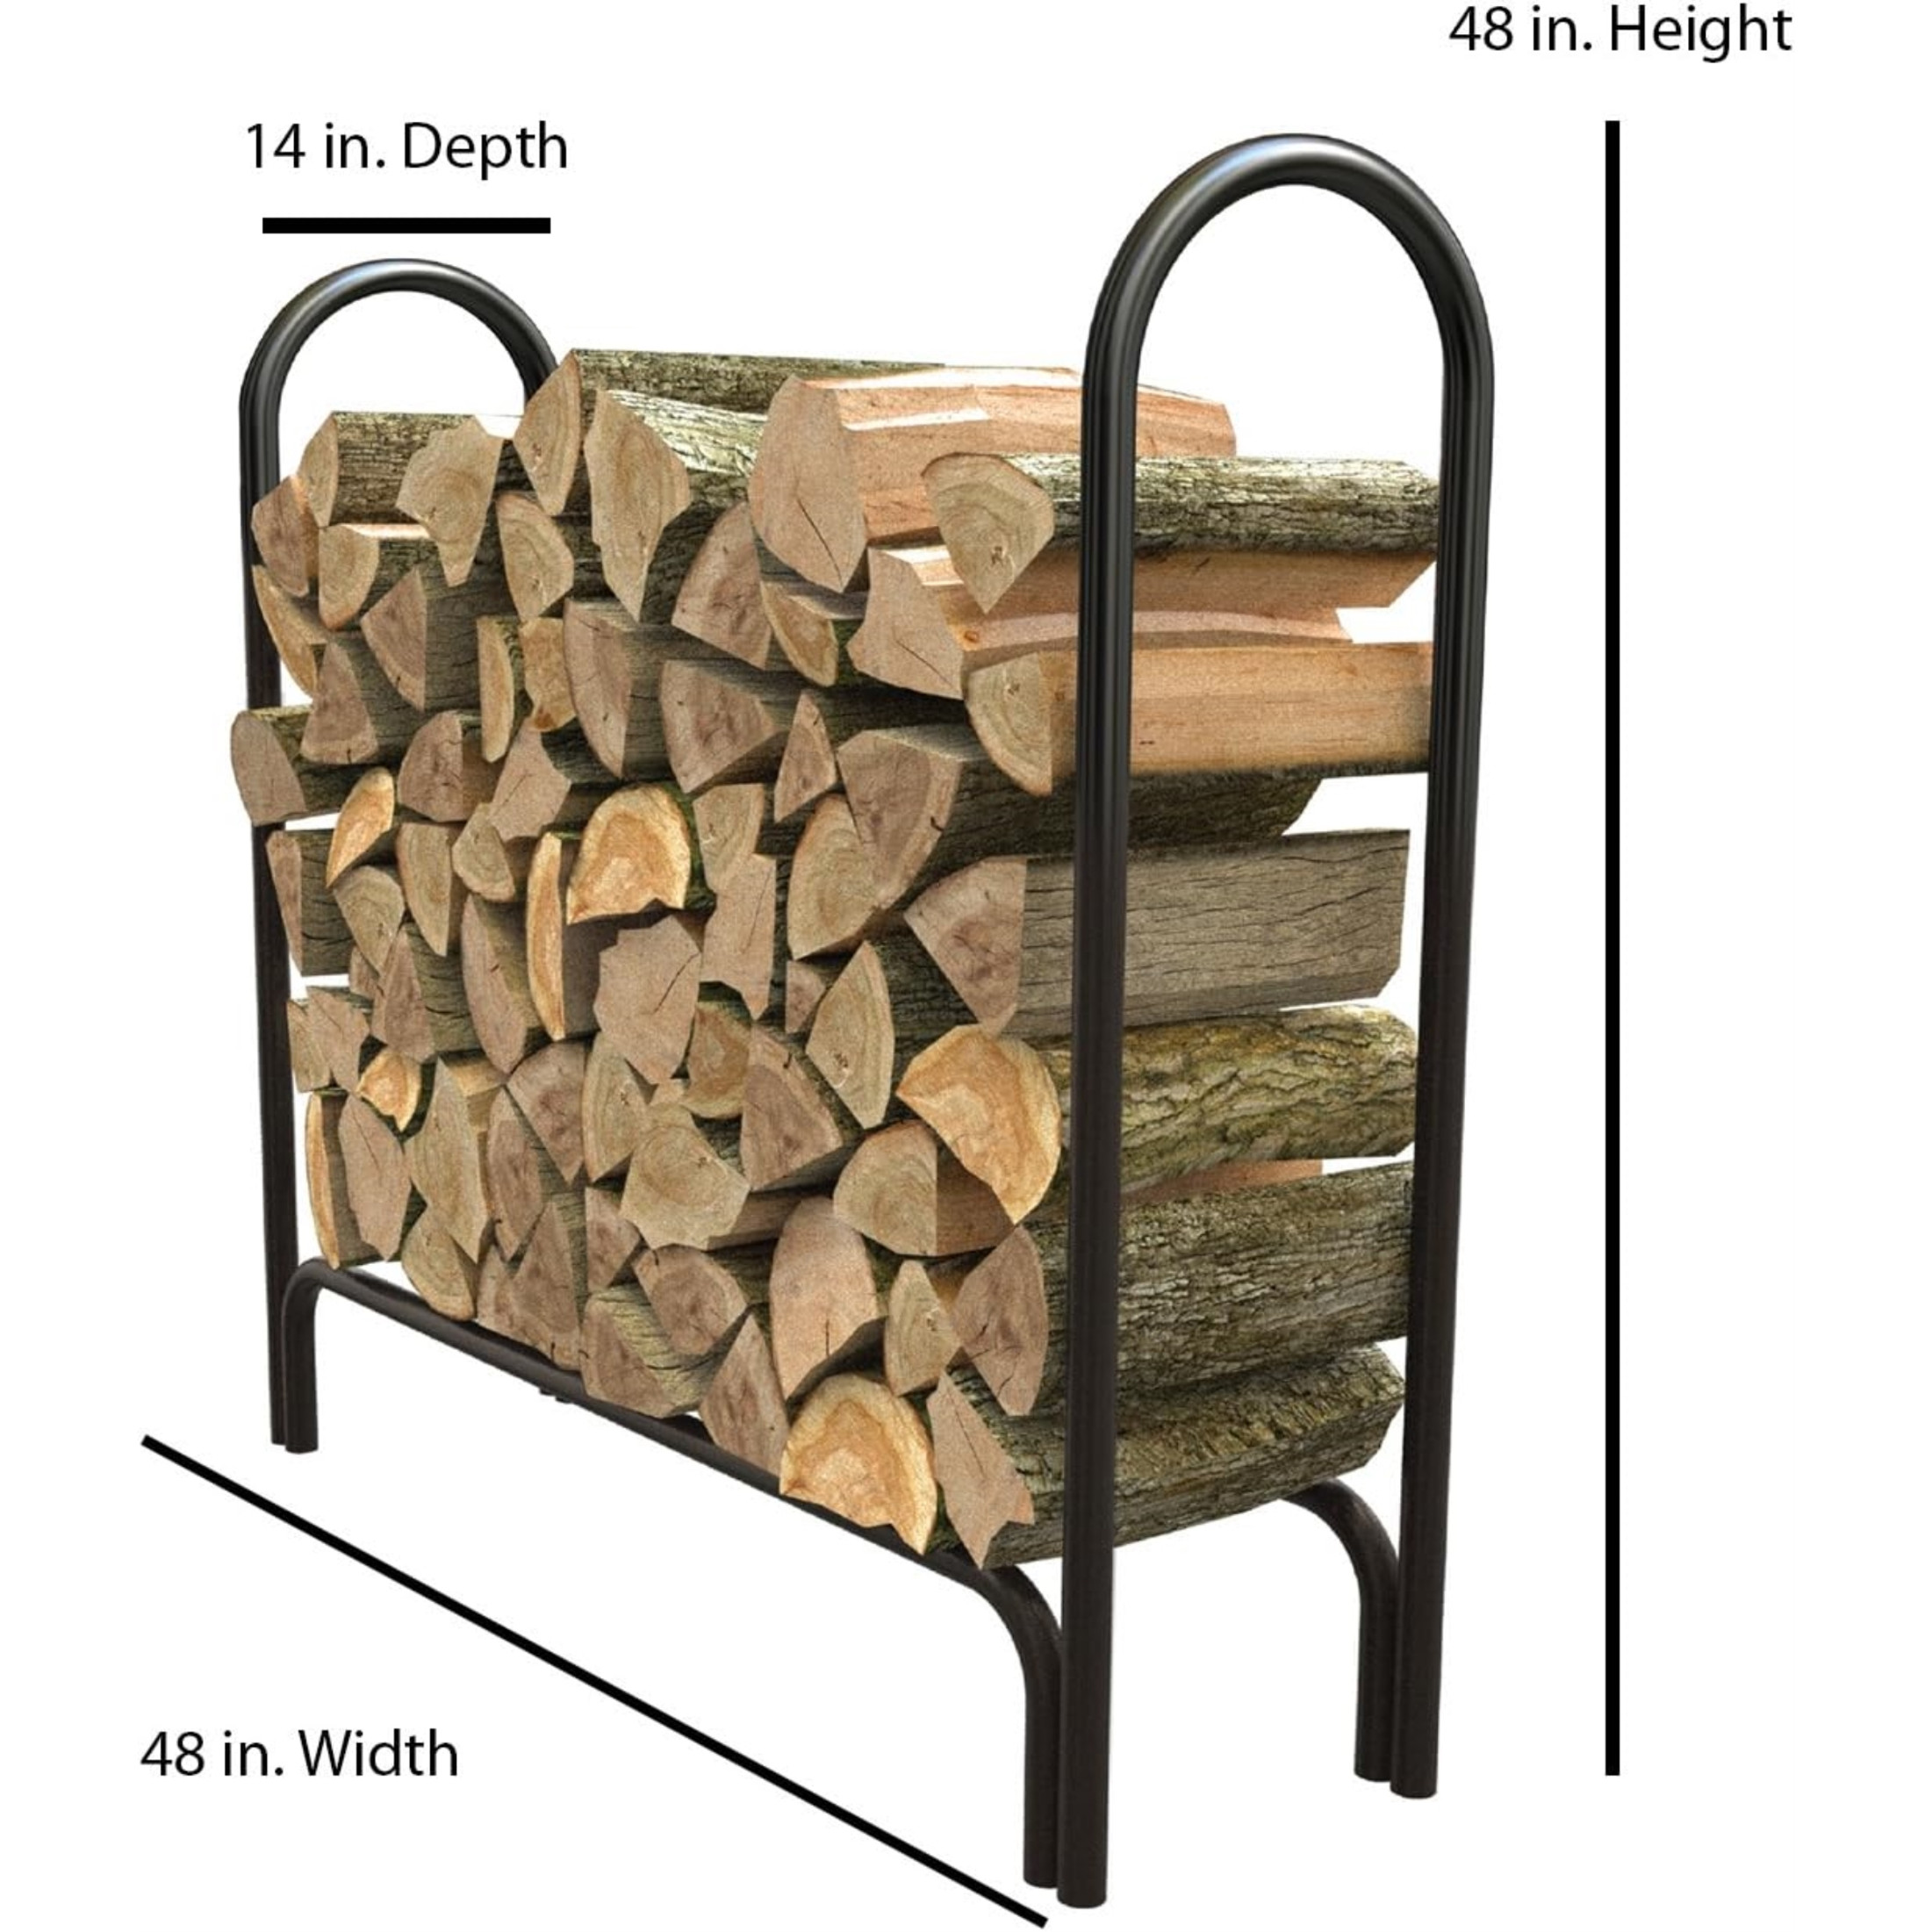 Panacea Steel Deluxe Outdoor Firewood Log Rack, Black, 4' Tall